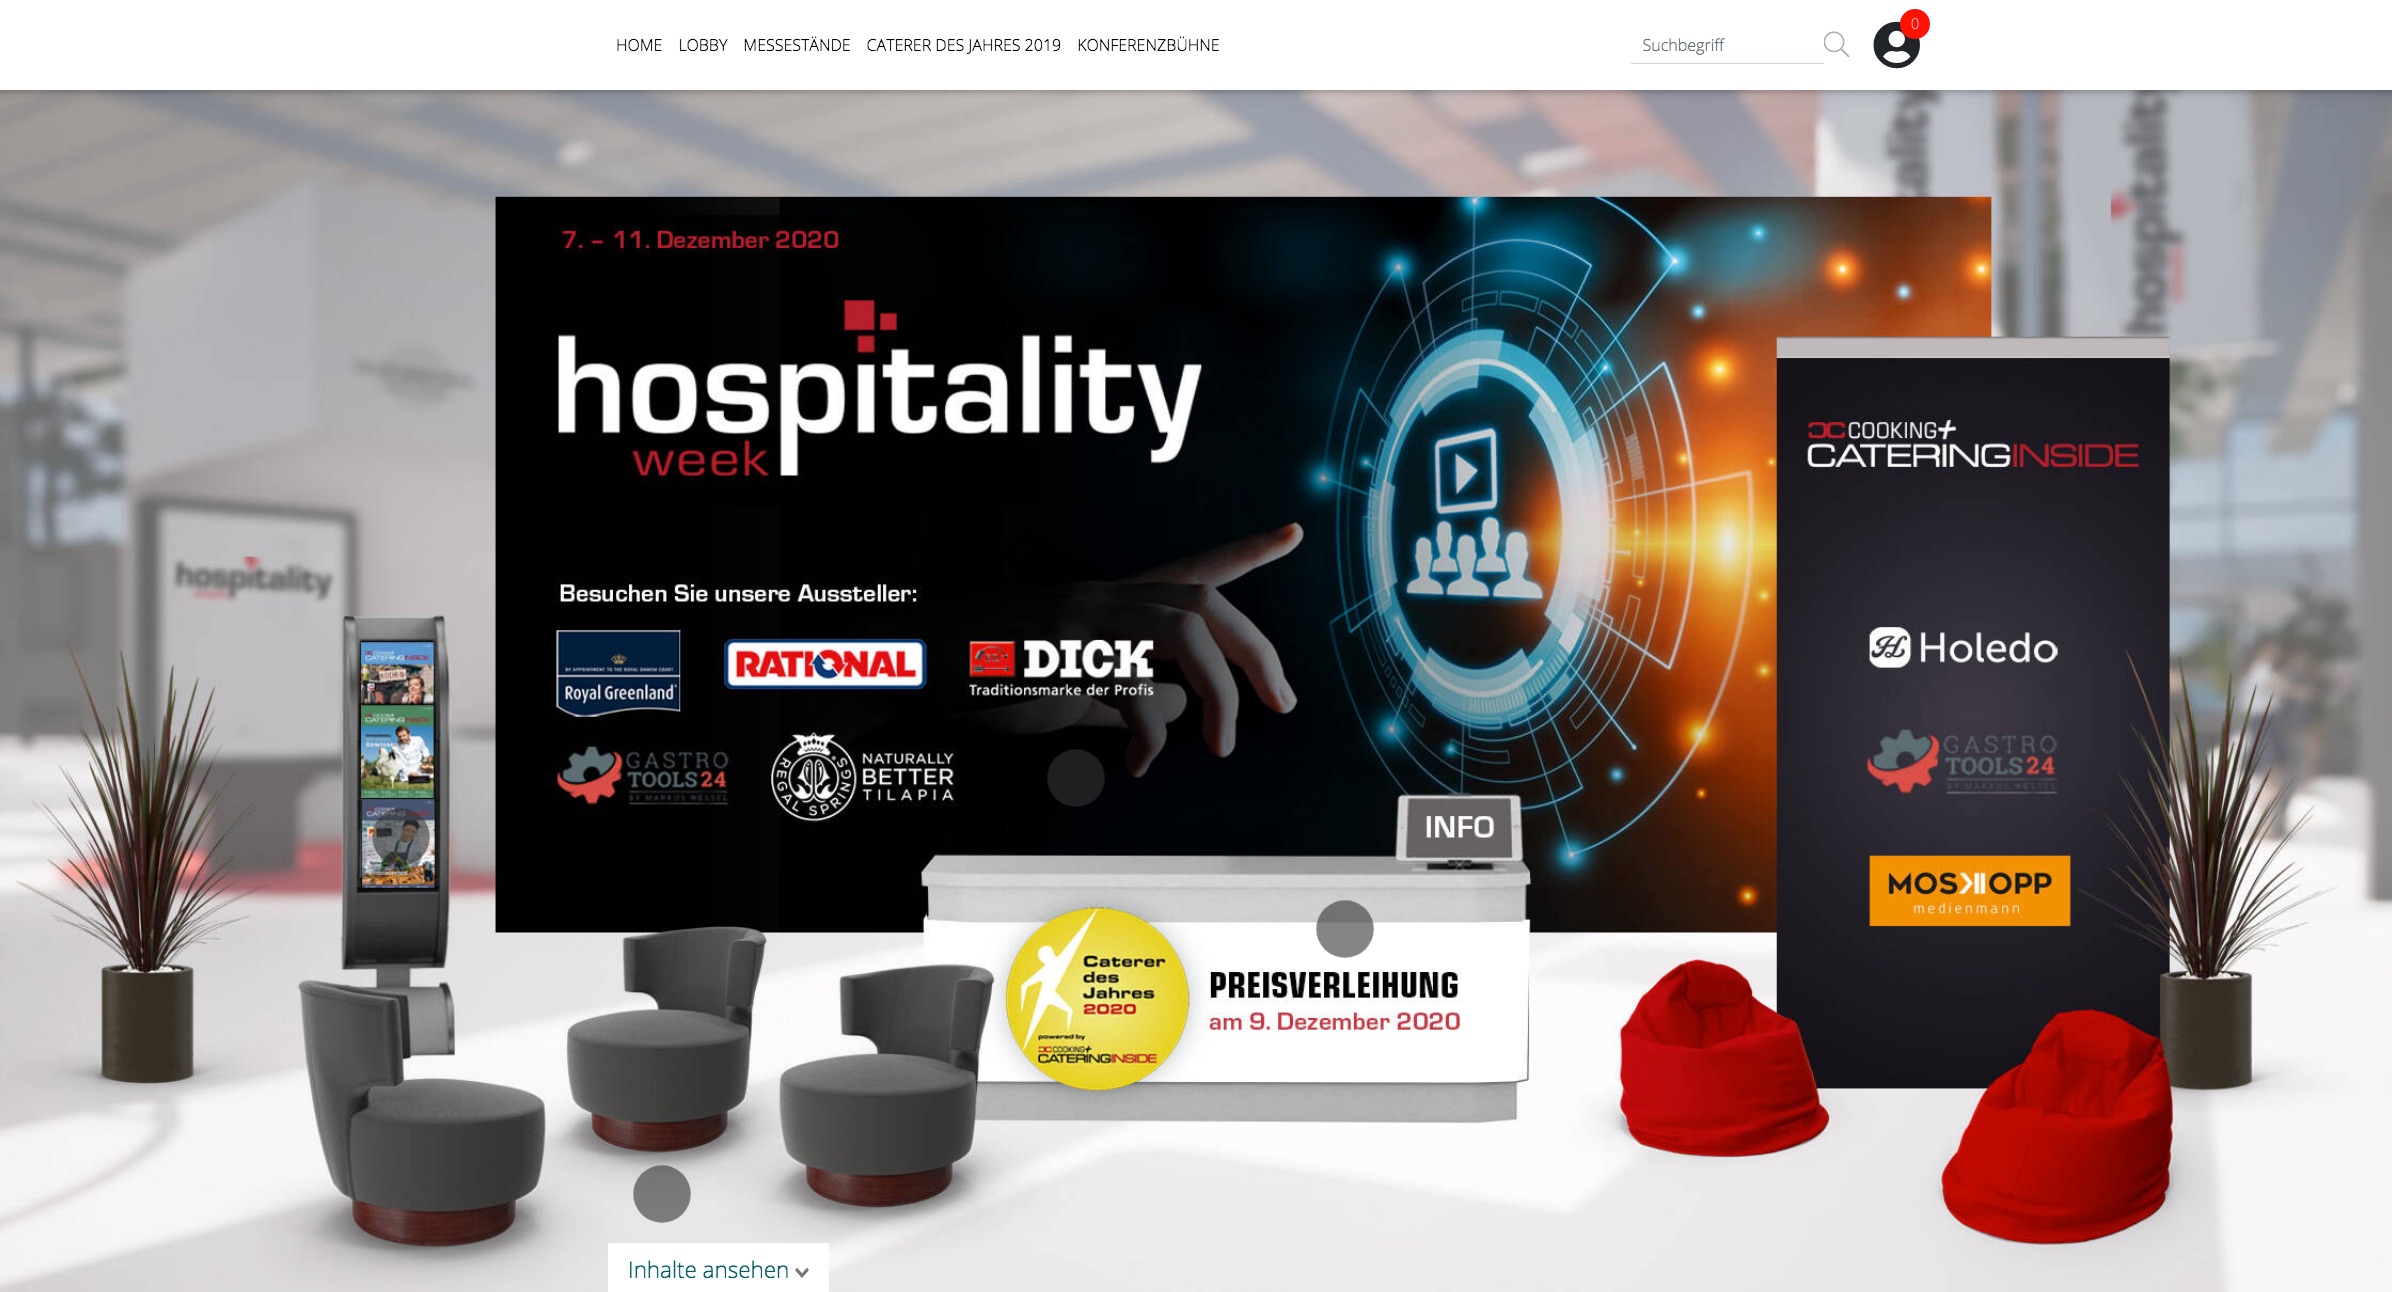 Hospitality Week 2020 - Lobby